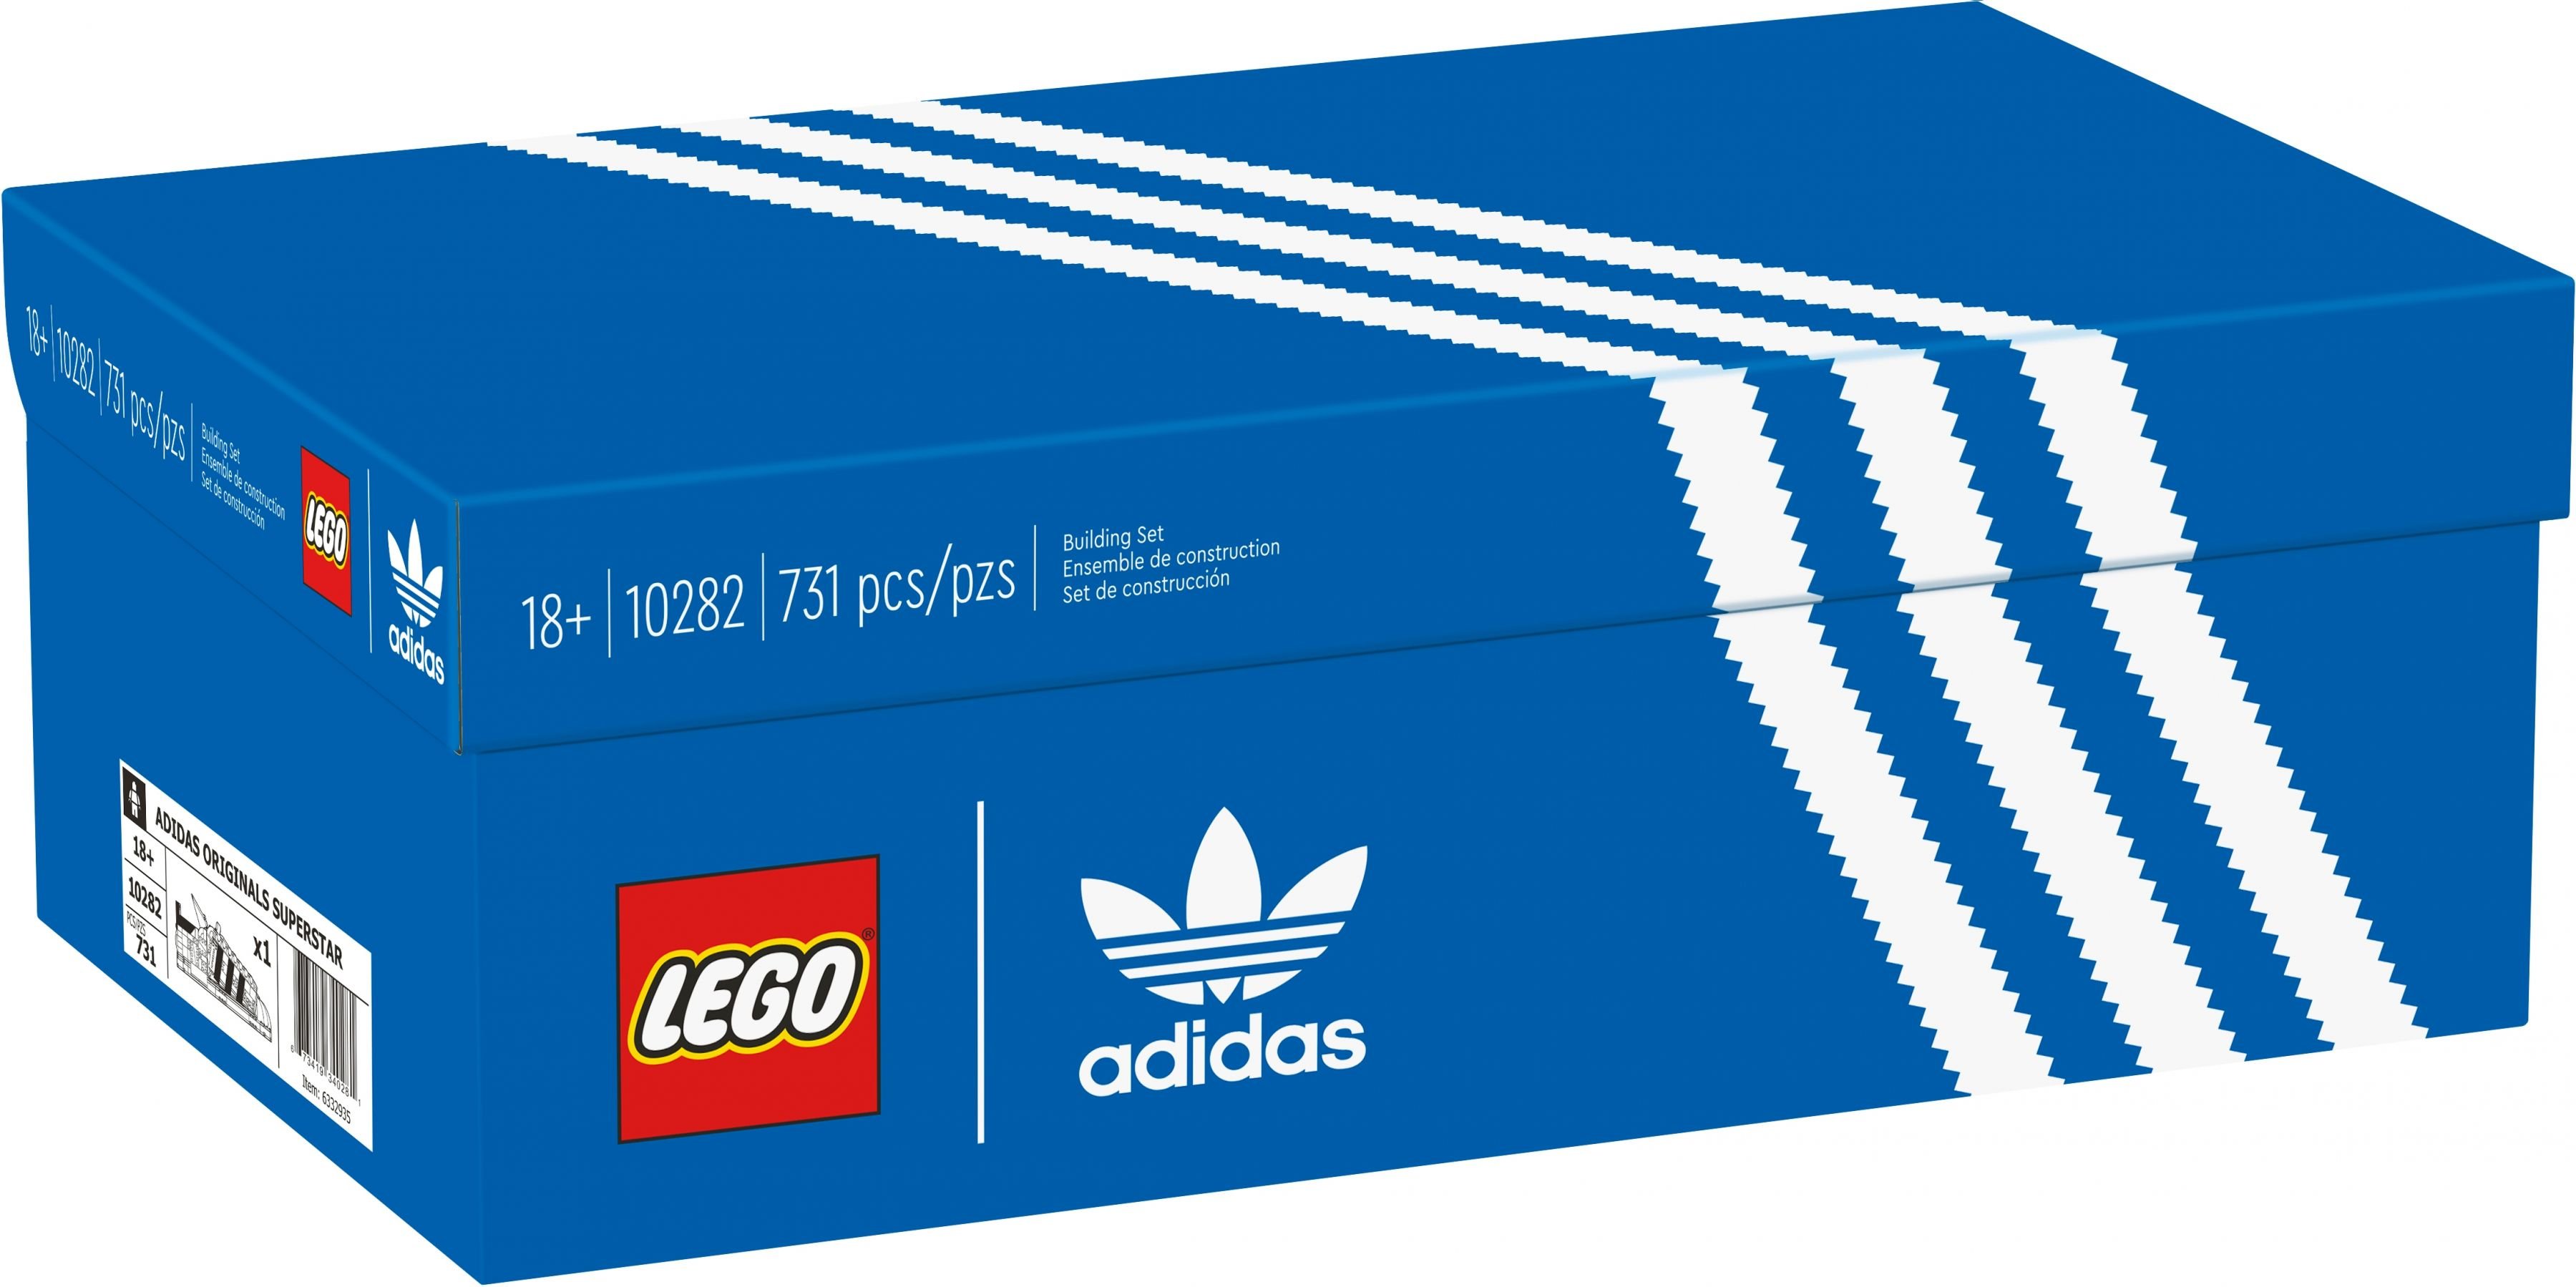 LEGO Advanced Models 10282 adidas Originals Superstar LEGO_10282_box1_v39.jpg